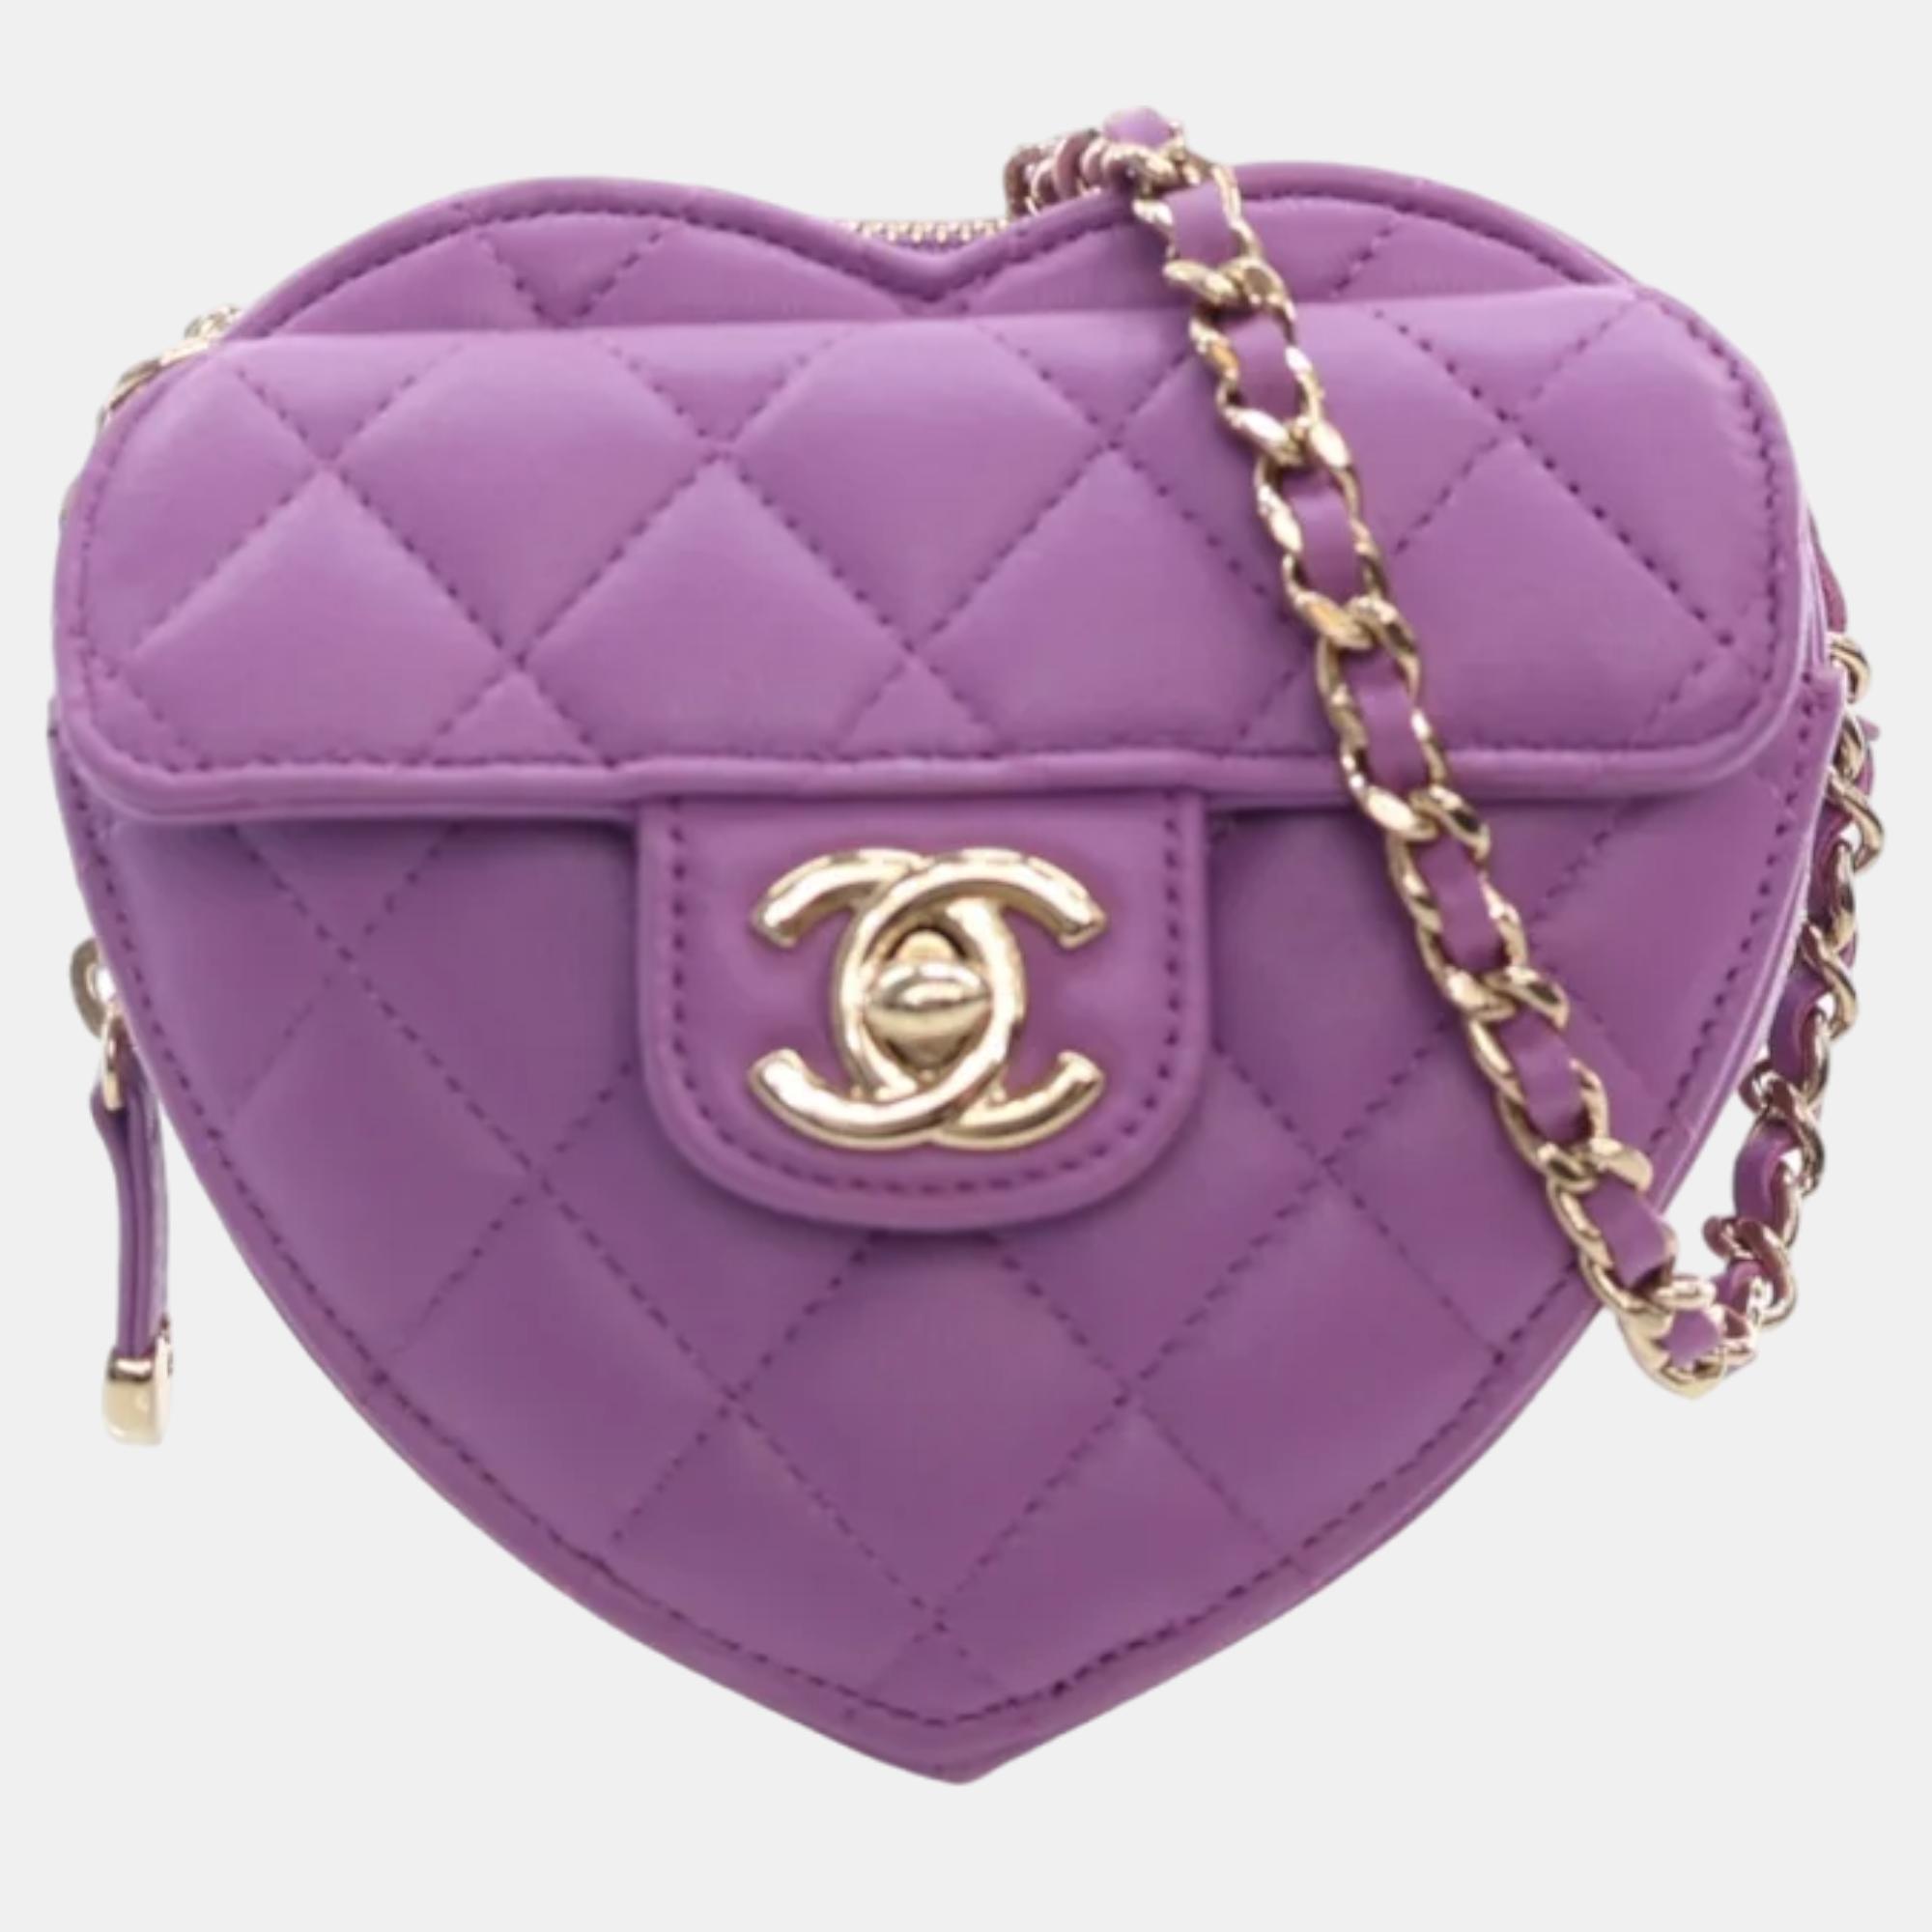 Chanel purple leather mini cc in love heart shoulder bags